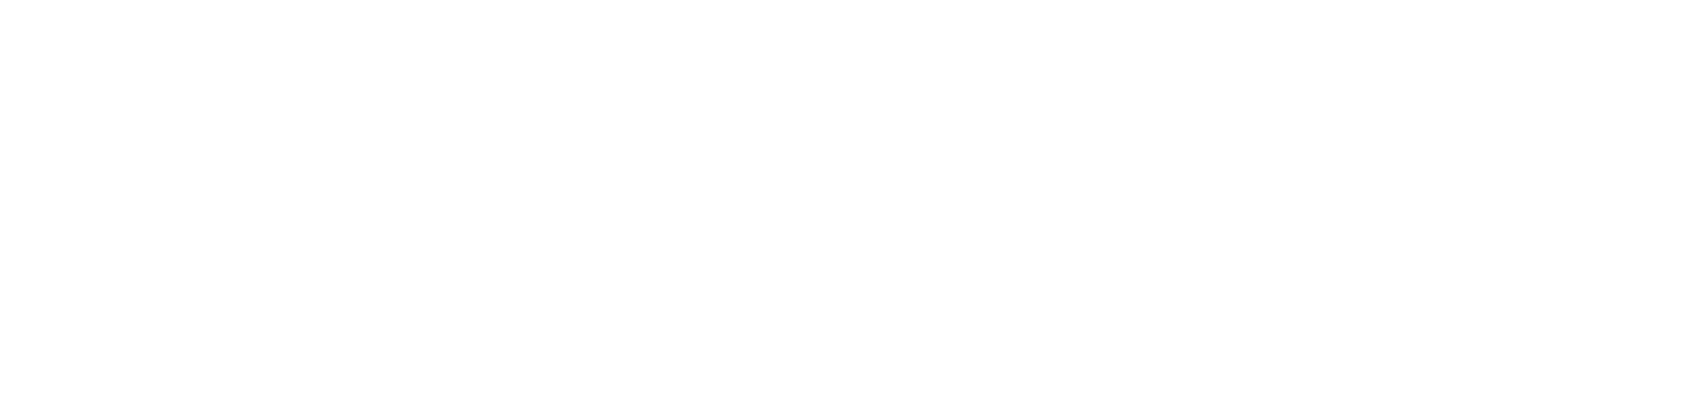 Logo Playnetic - Human Powered Play 2019